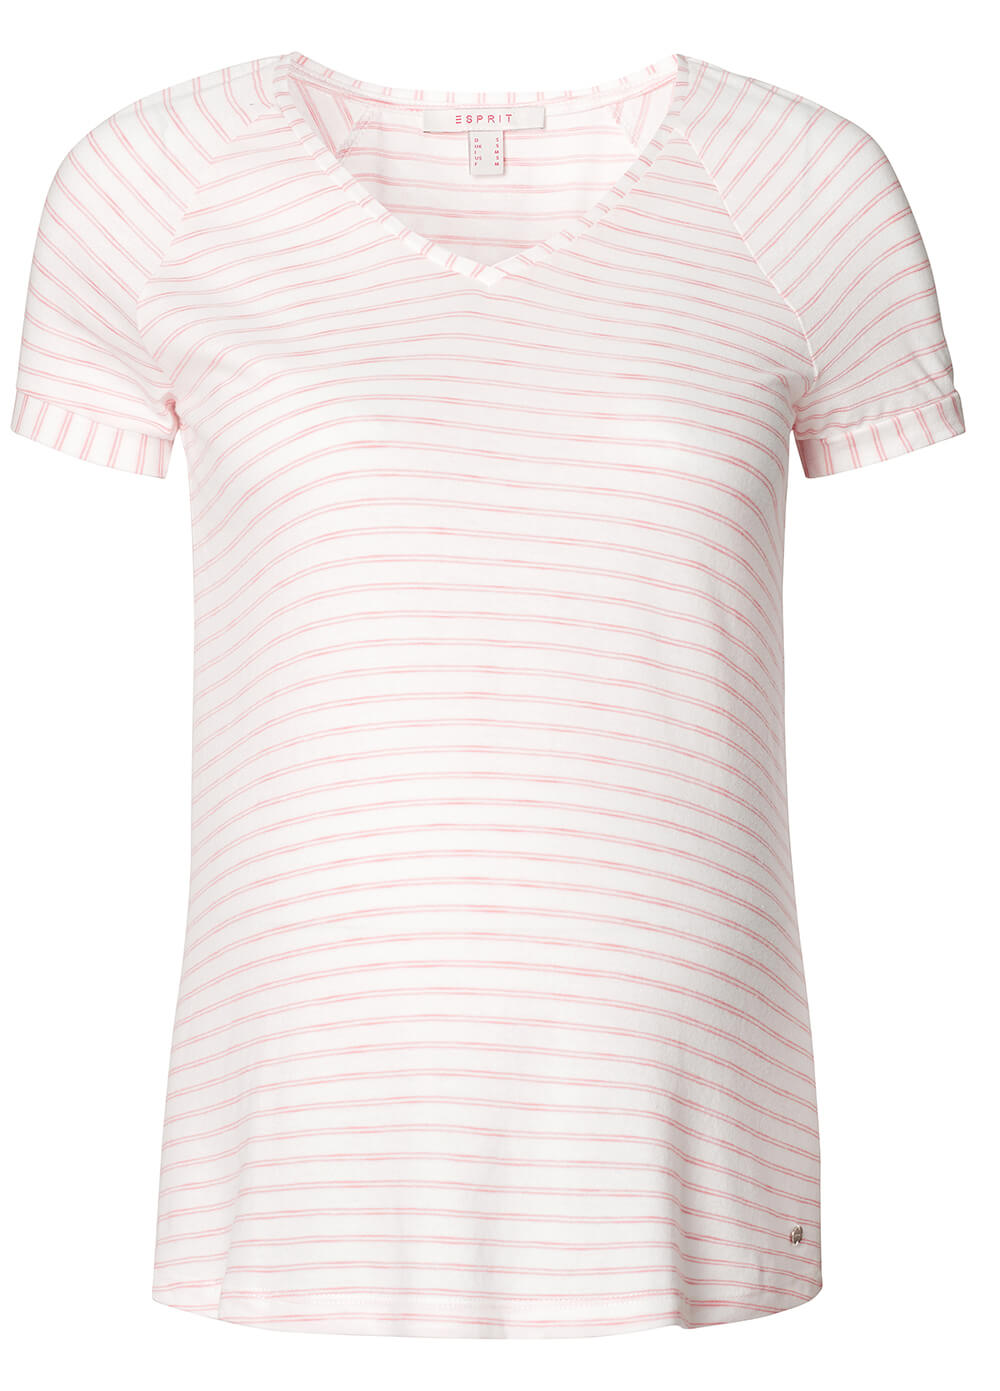 Raglan Maternity T-Shirt in Pink Stripes by Esprit